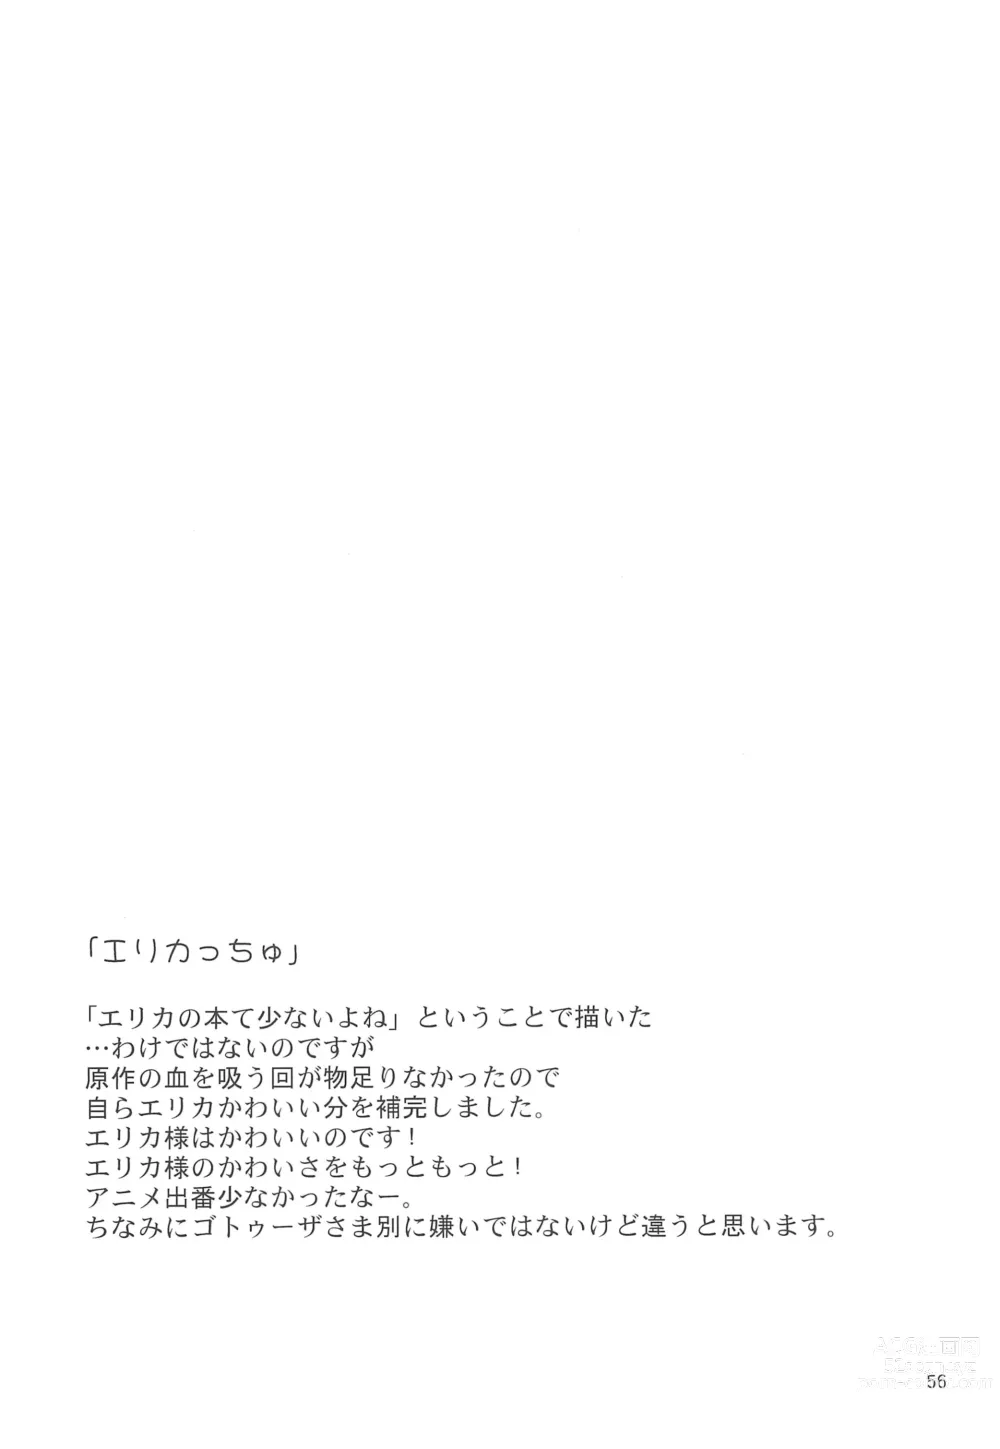 Page 56 of doujinshi Maigo no Maigo no Hime-sama Plus